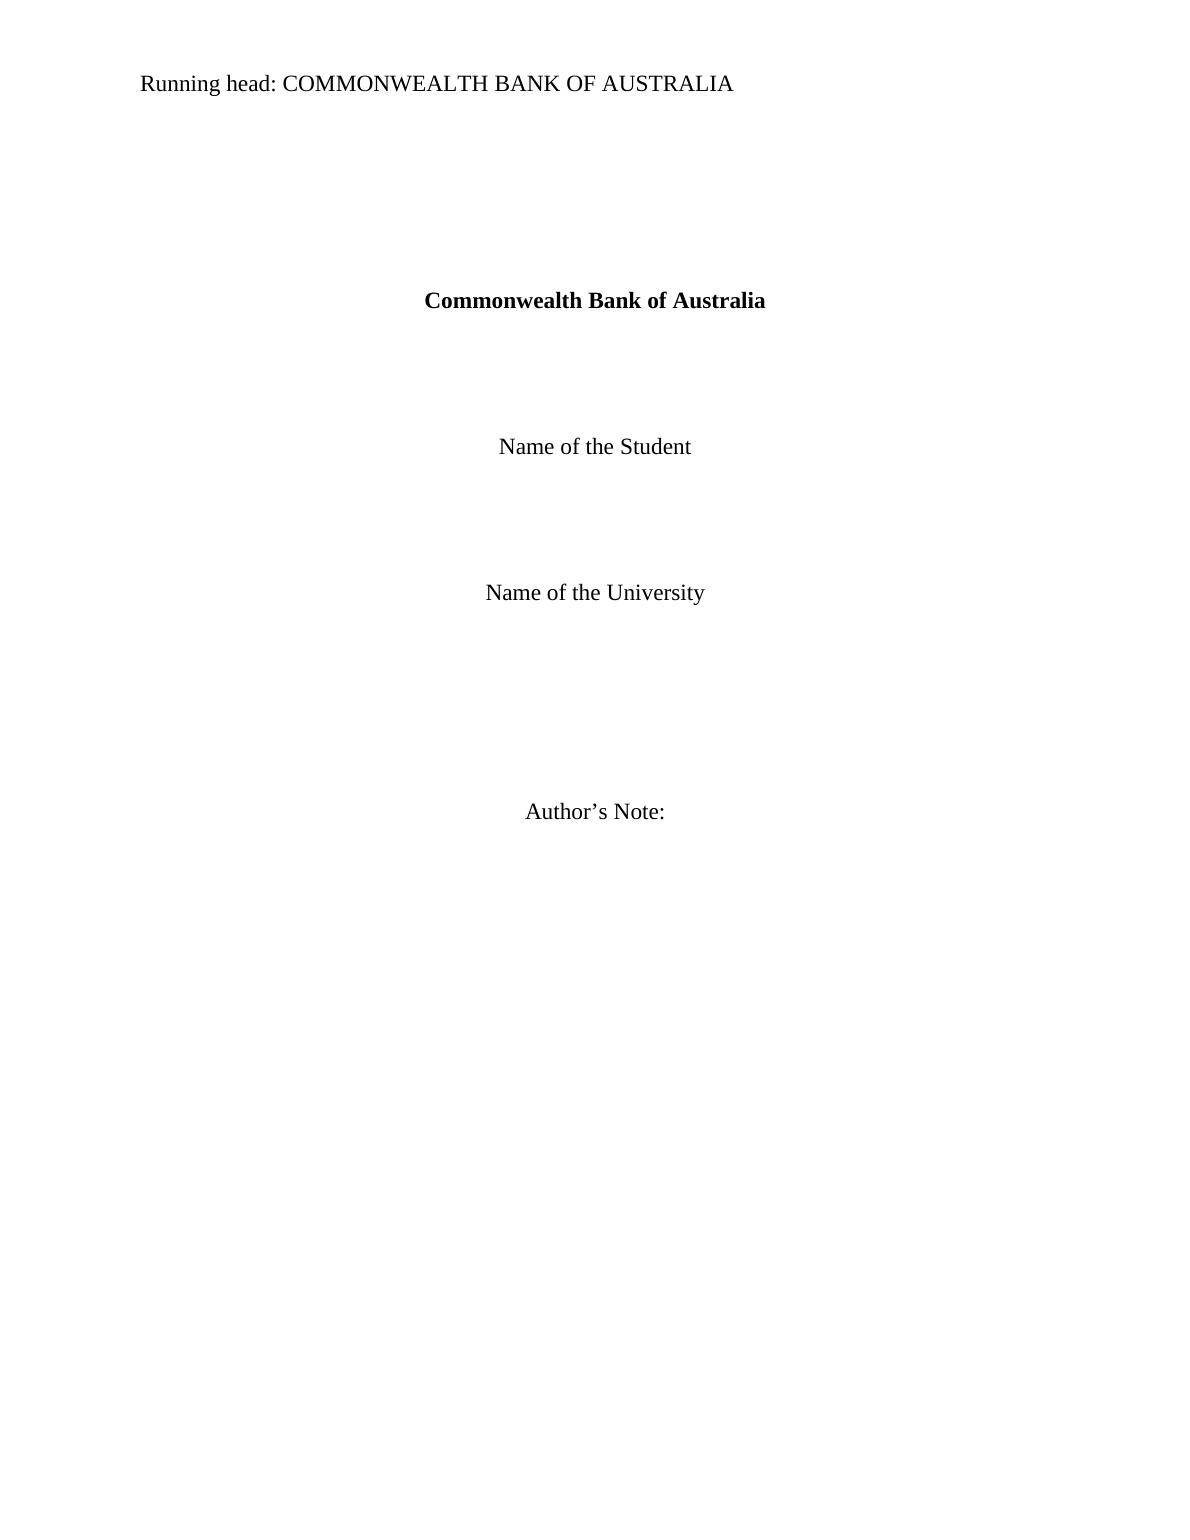 Case Study on Commonwealth Bank of Australia_1